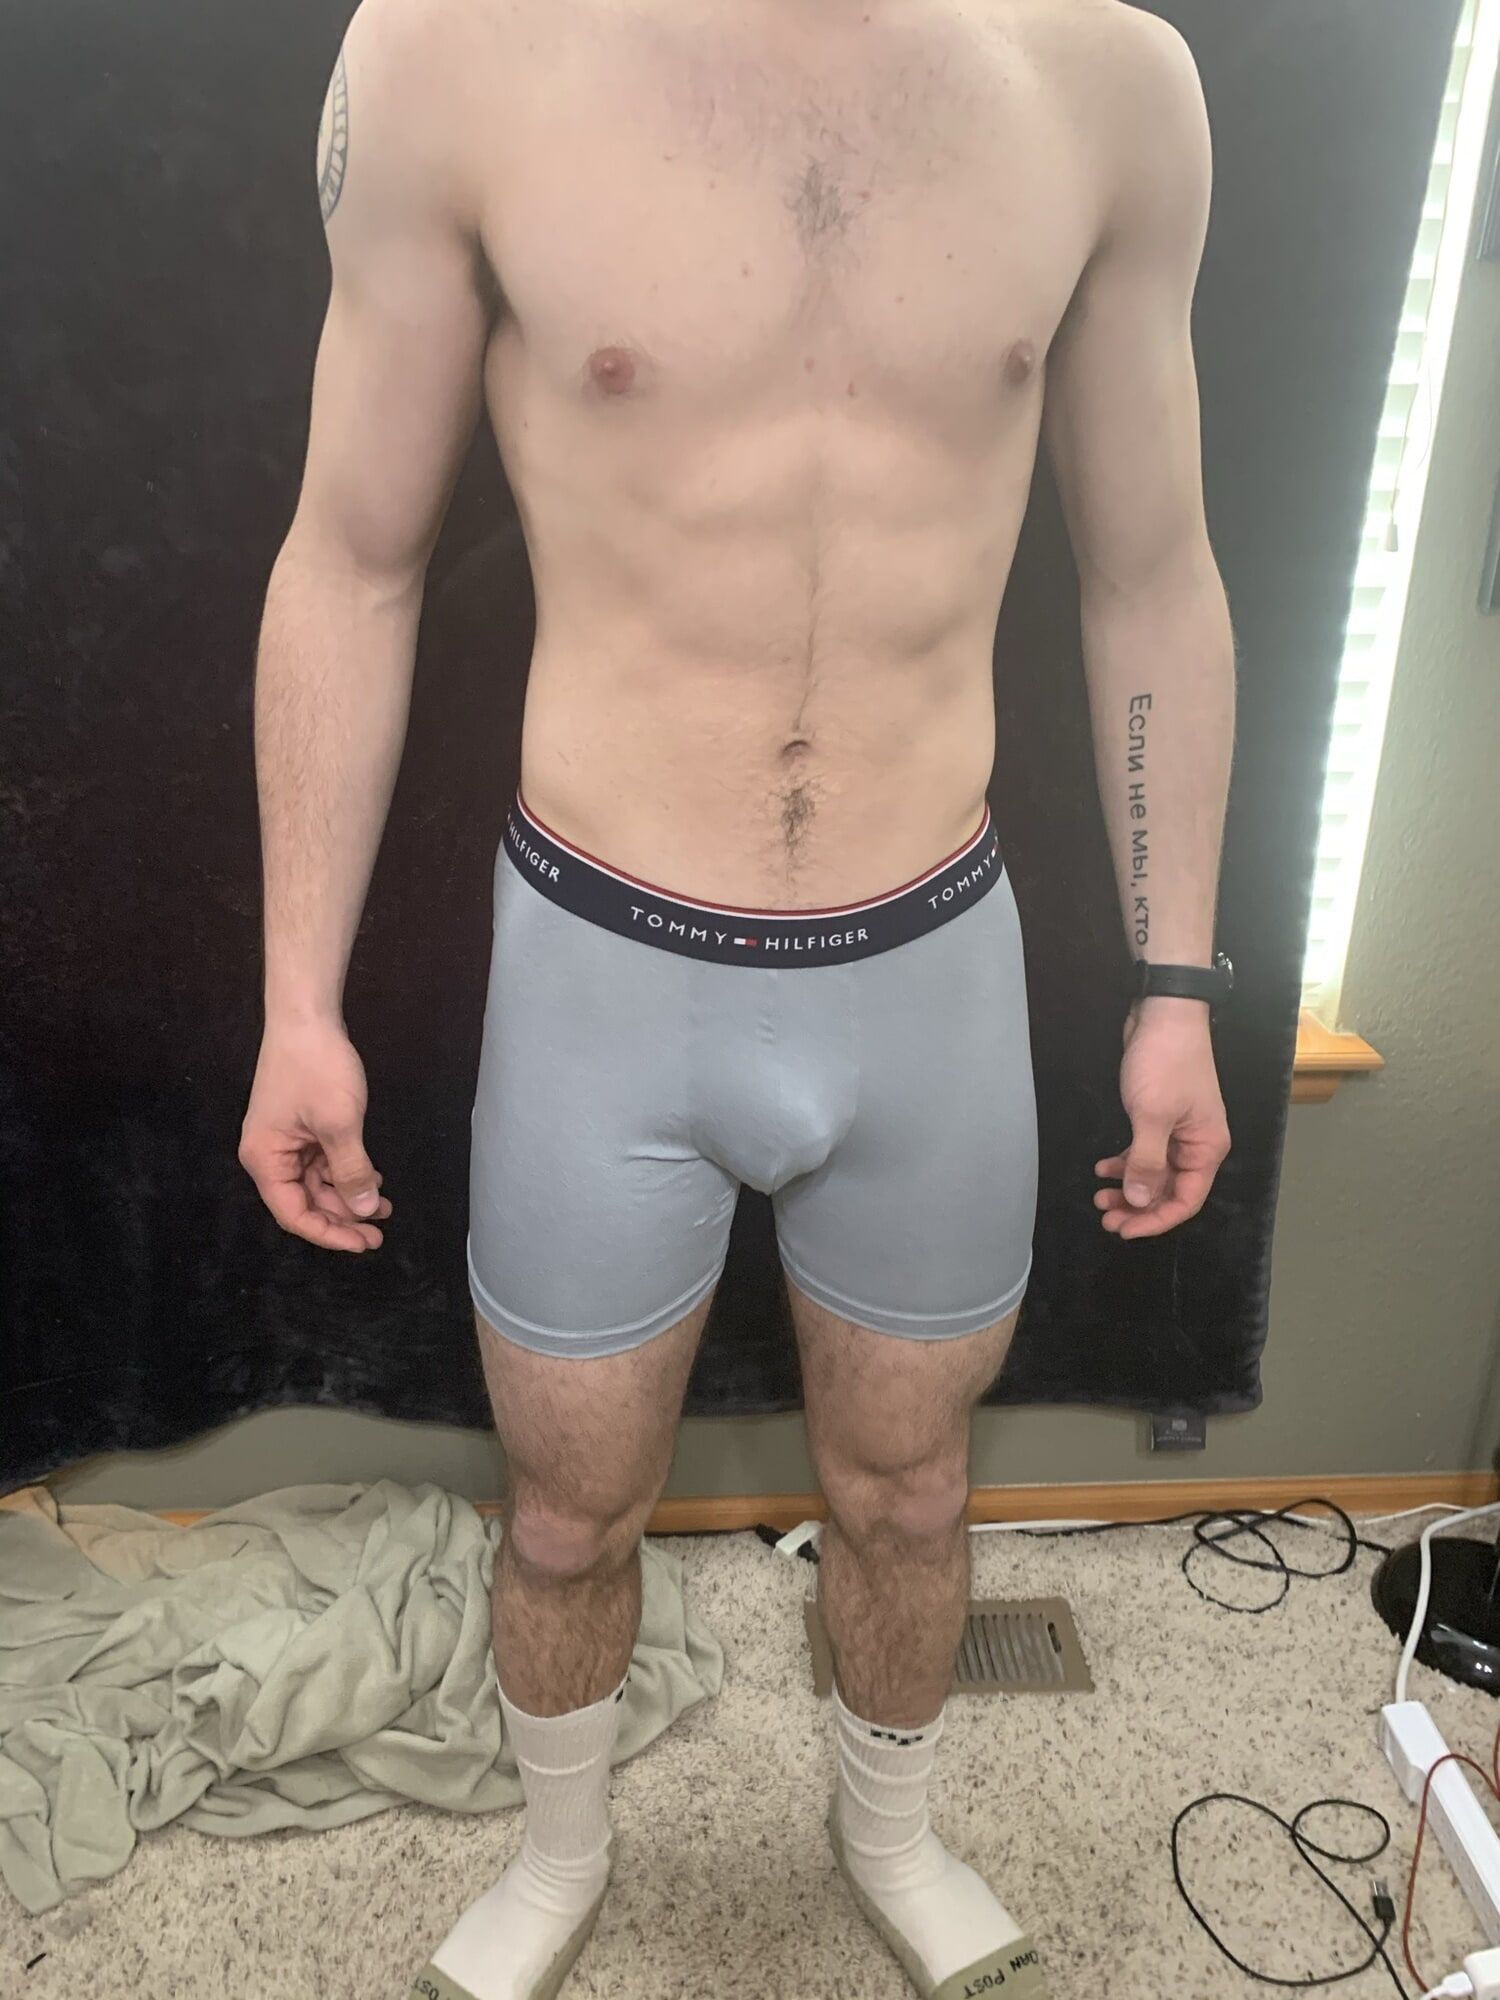 More showing off in undies! #36